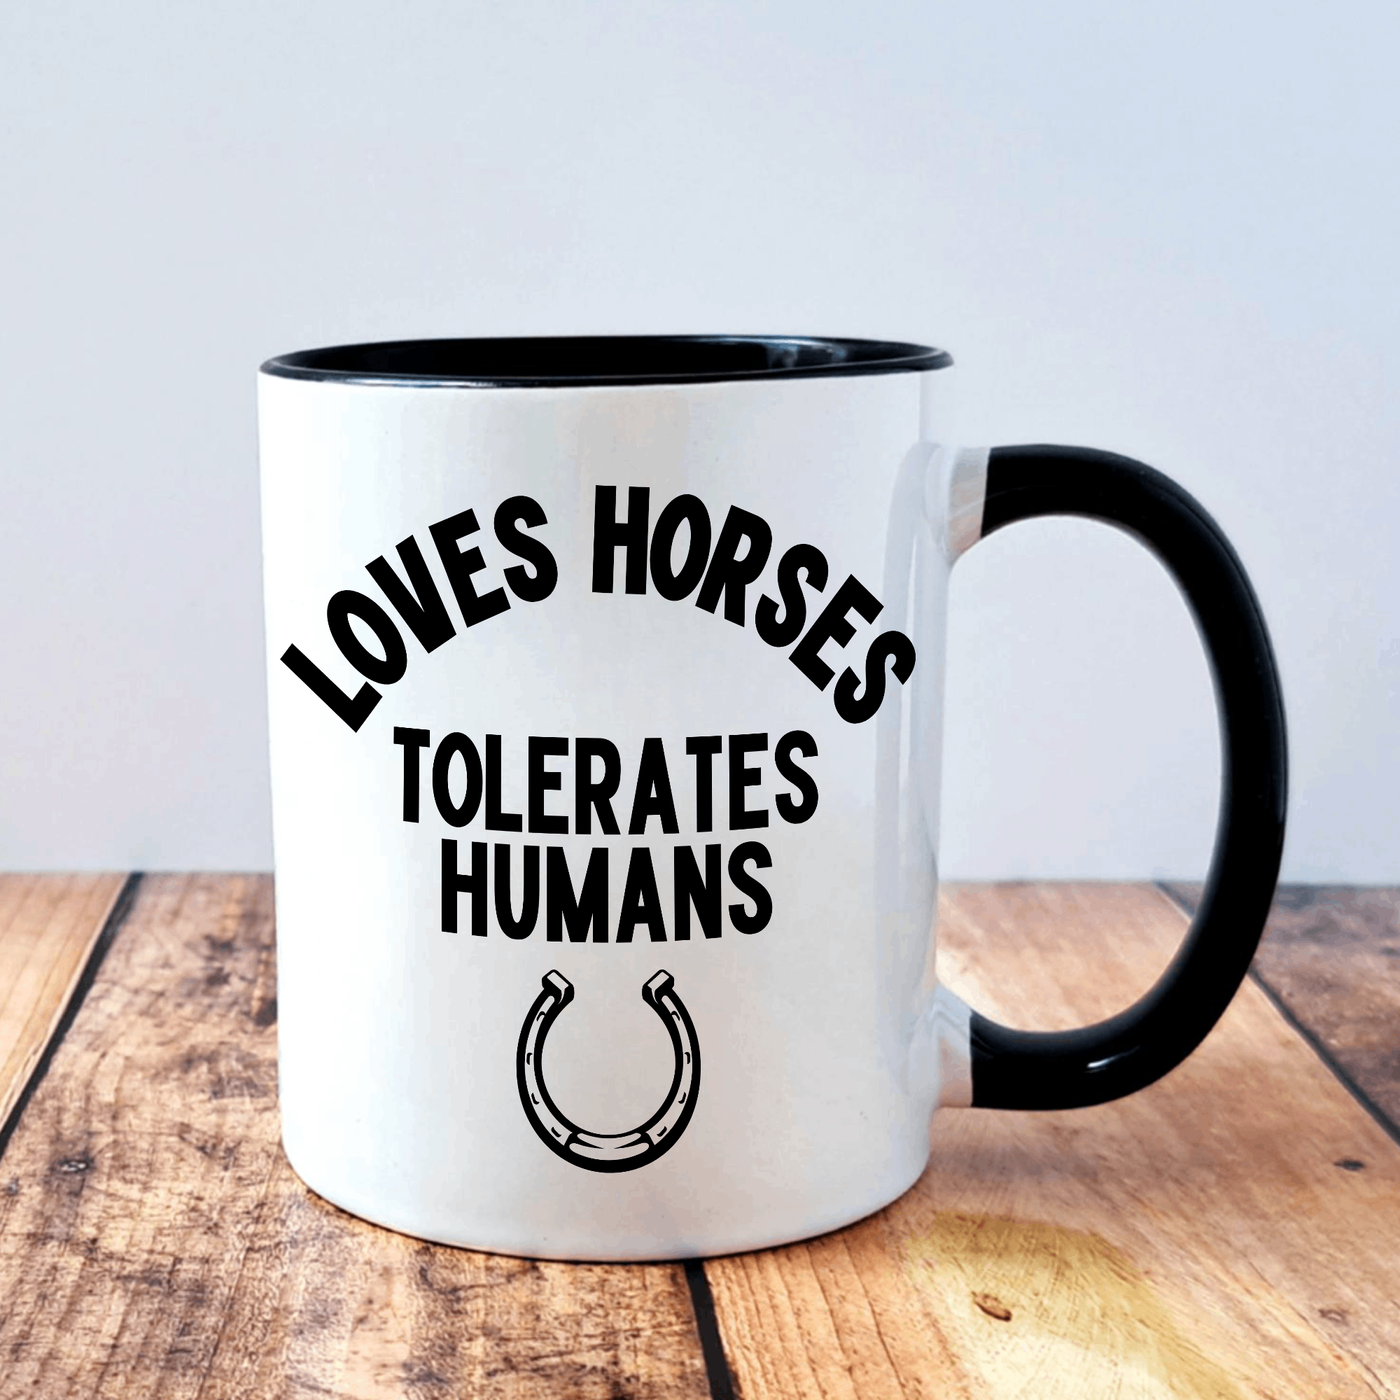 Loves Horses Tolerates Humans  - Mug